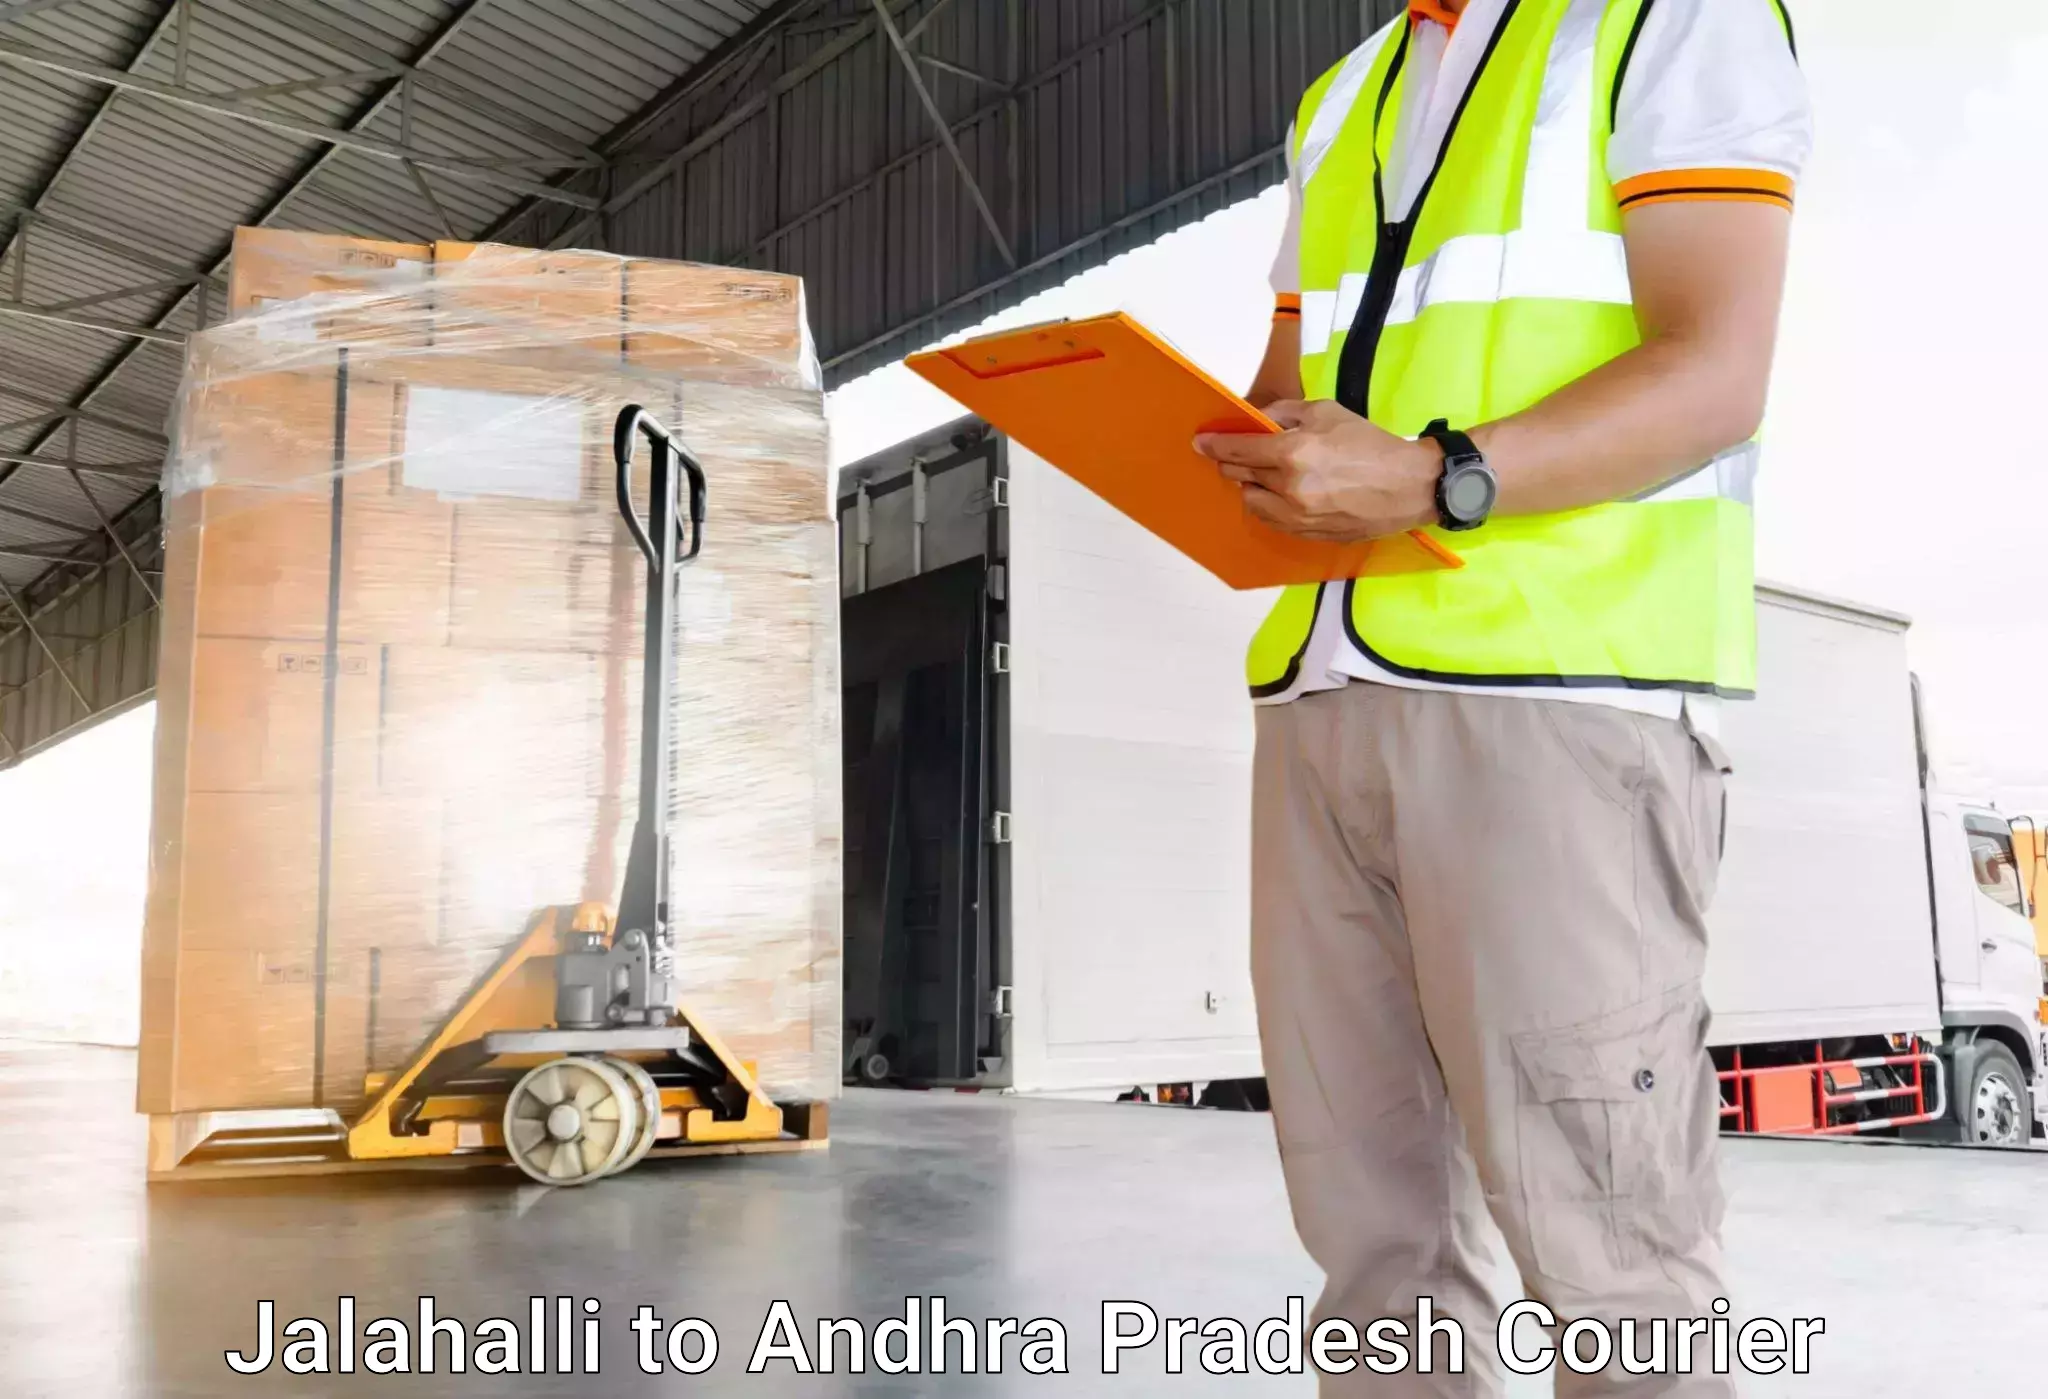 Luggage transport company Jalahalli to Challapalli